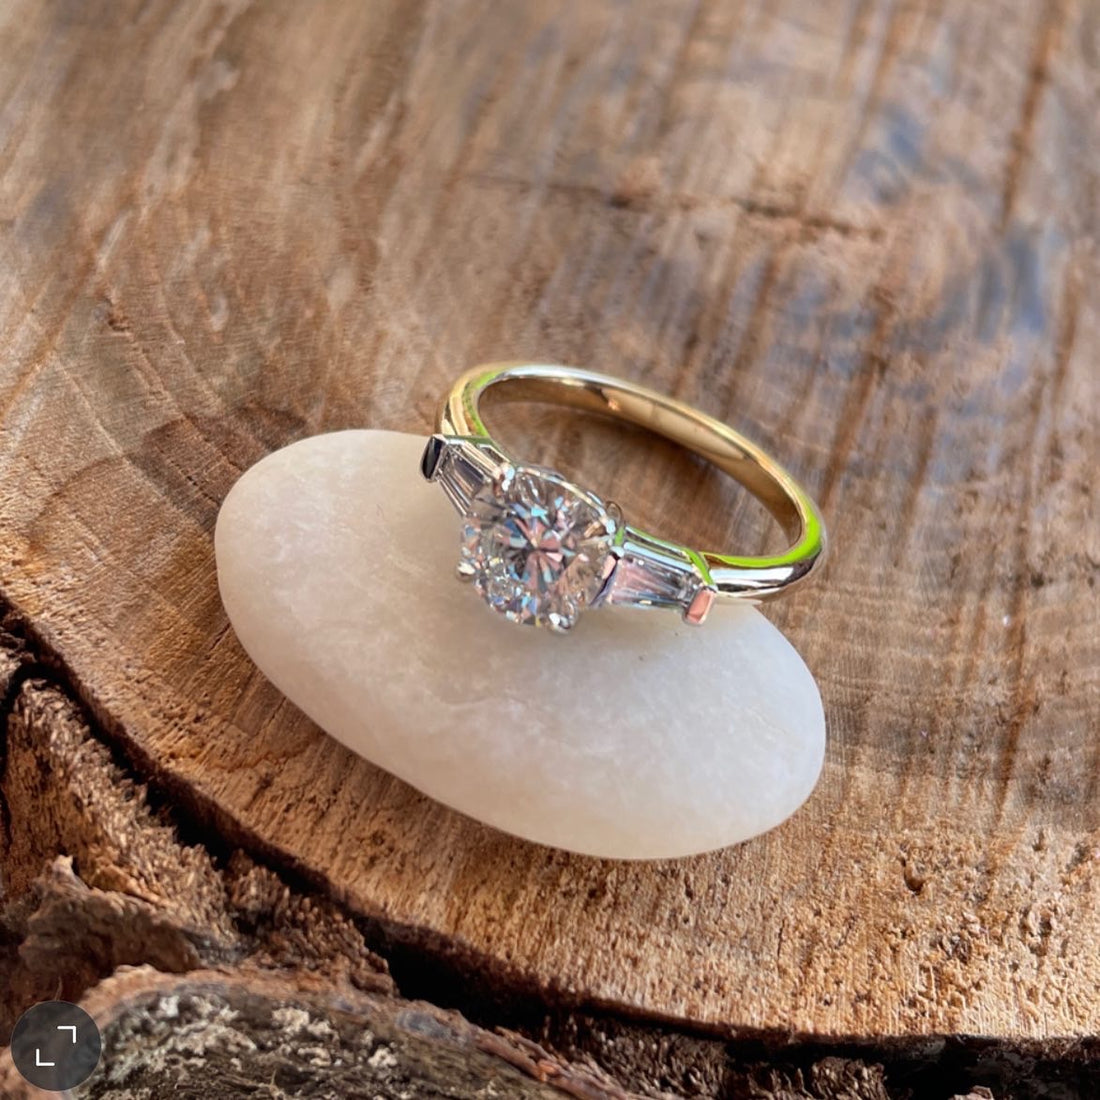 Andie's Diamond Ring Blog